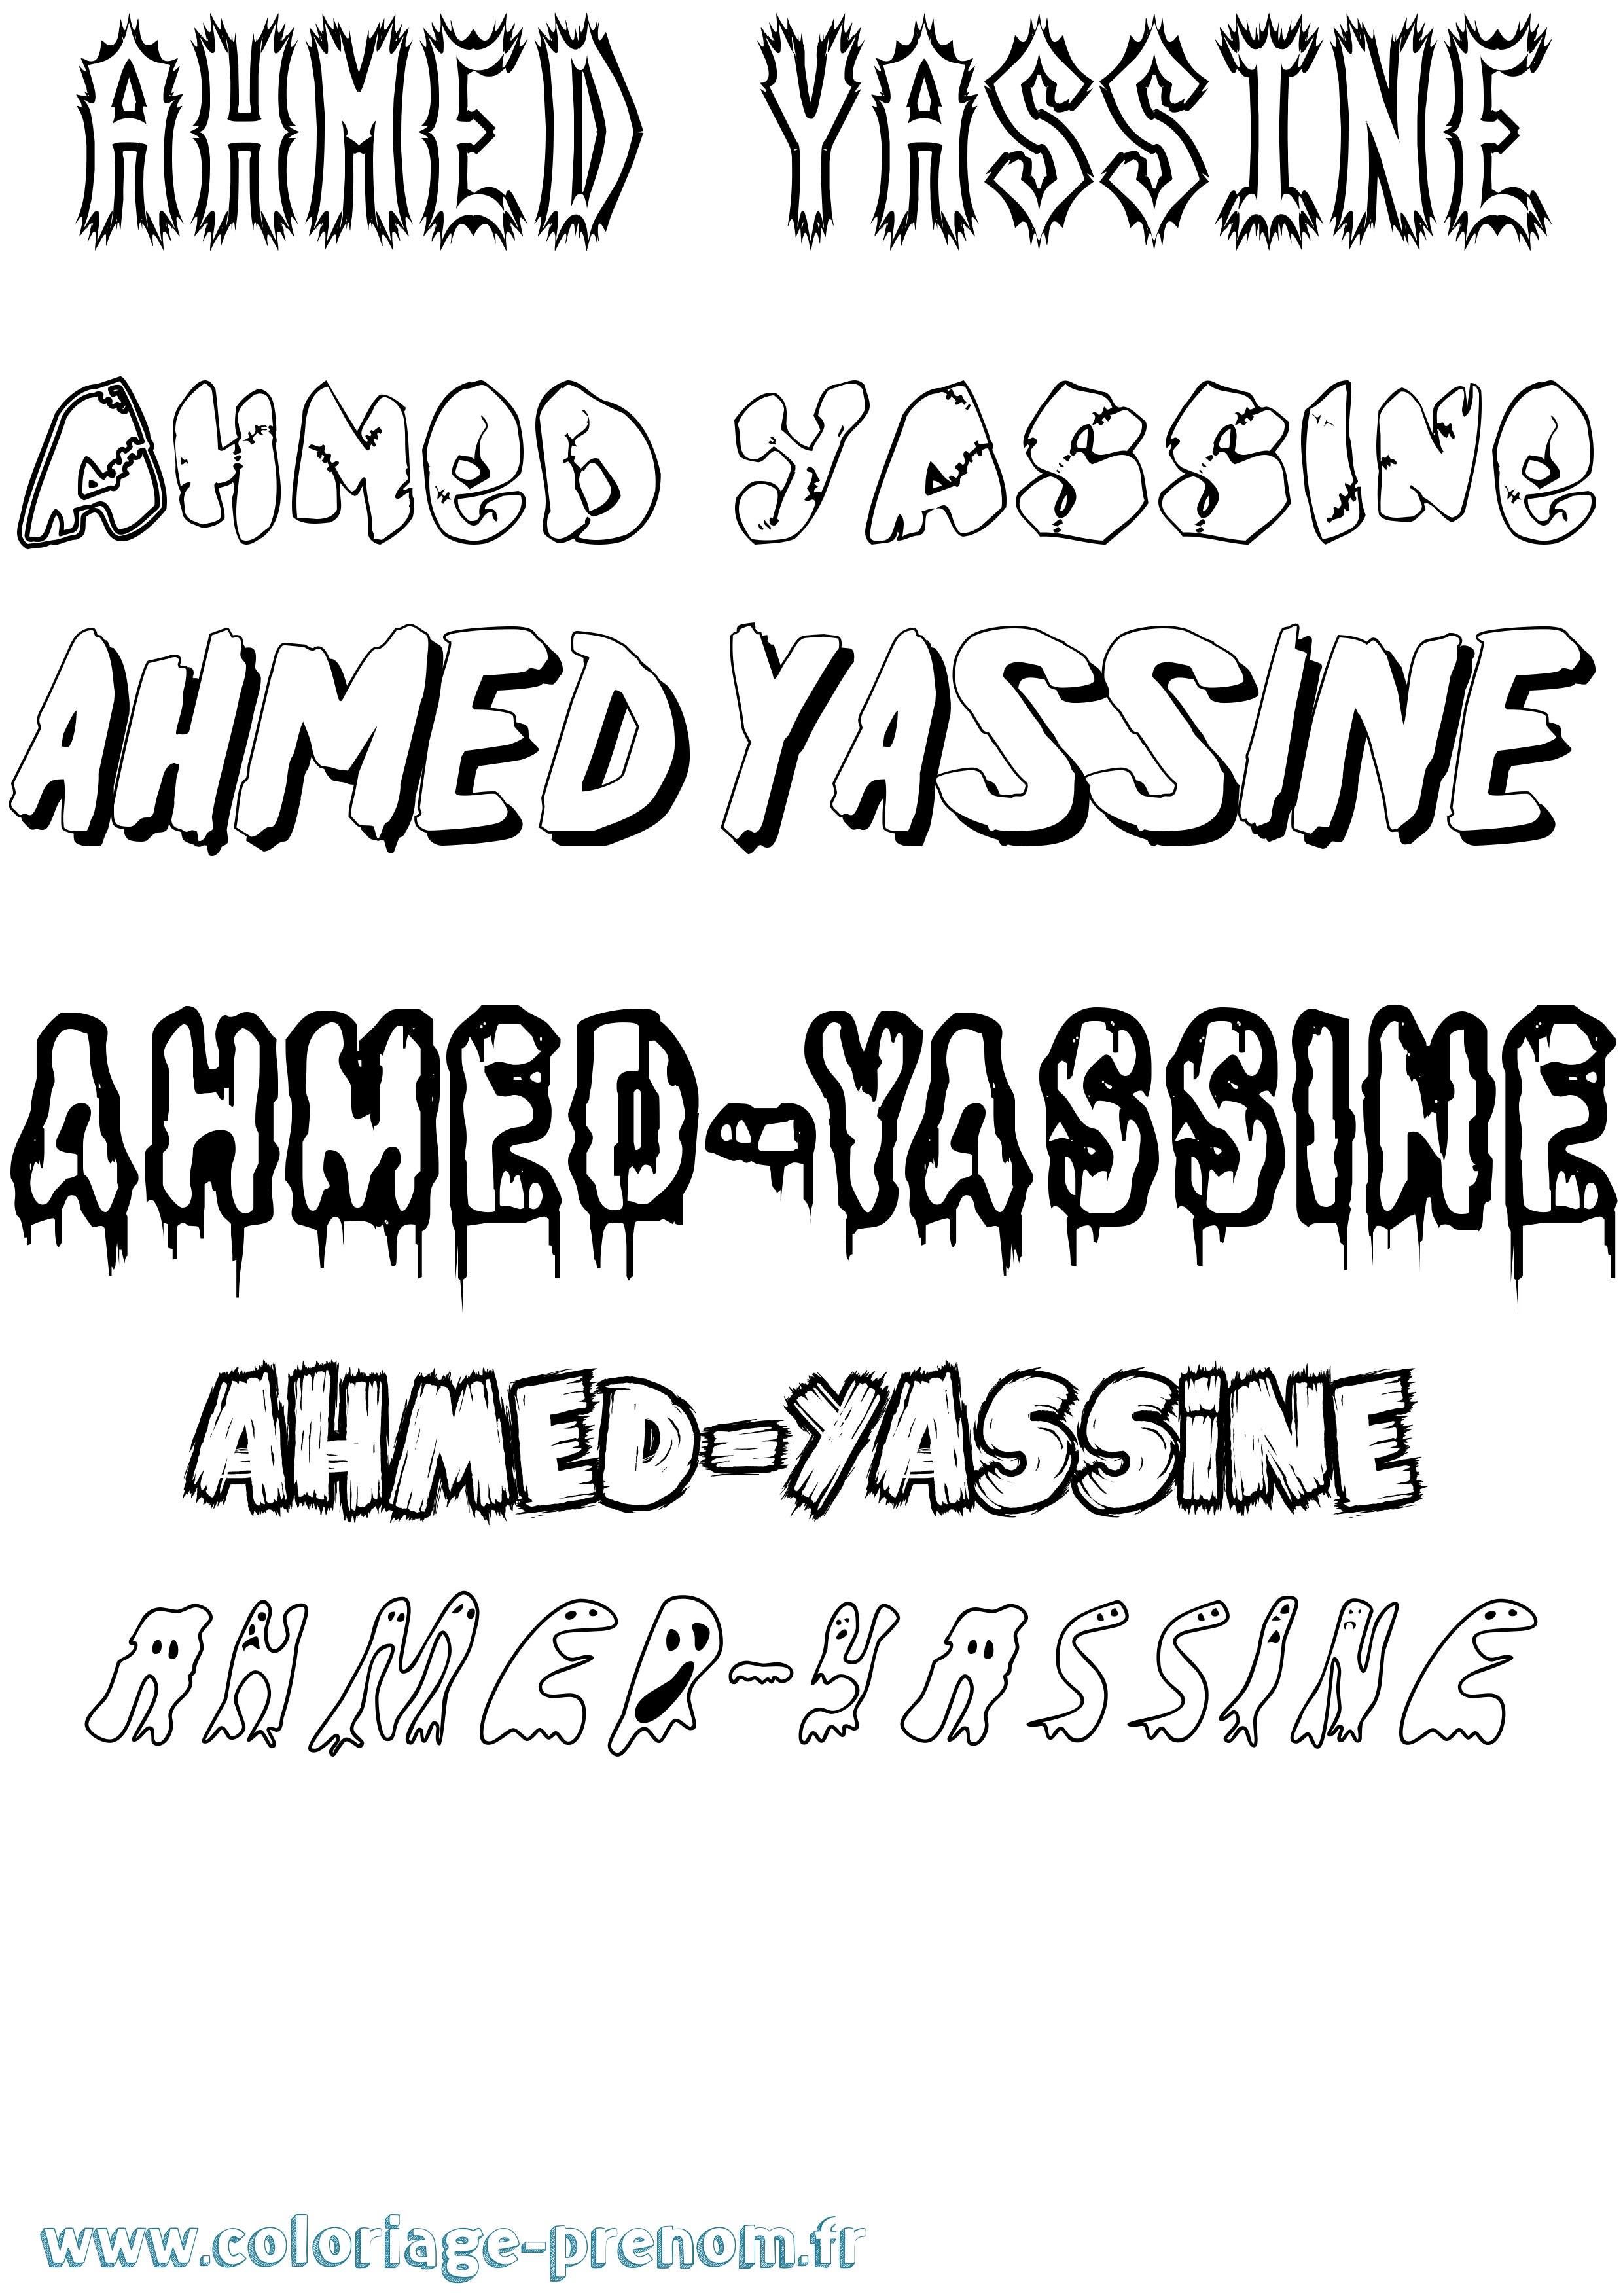 Coloriage prénom Ahmed-Yassine Frisson